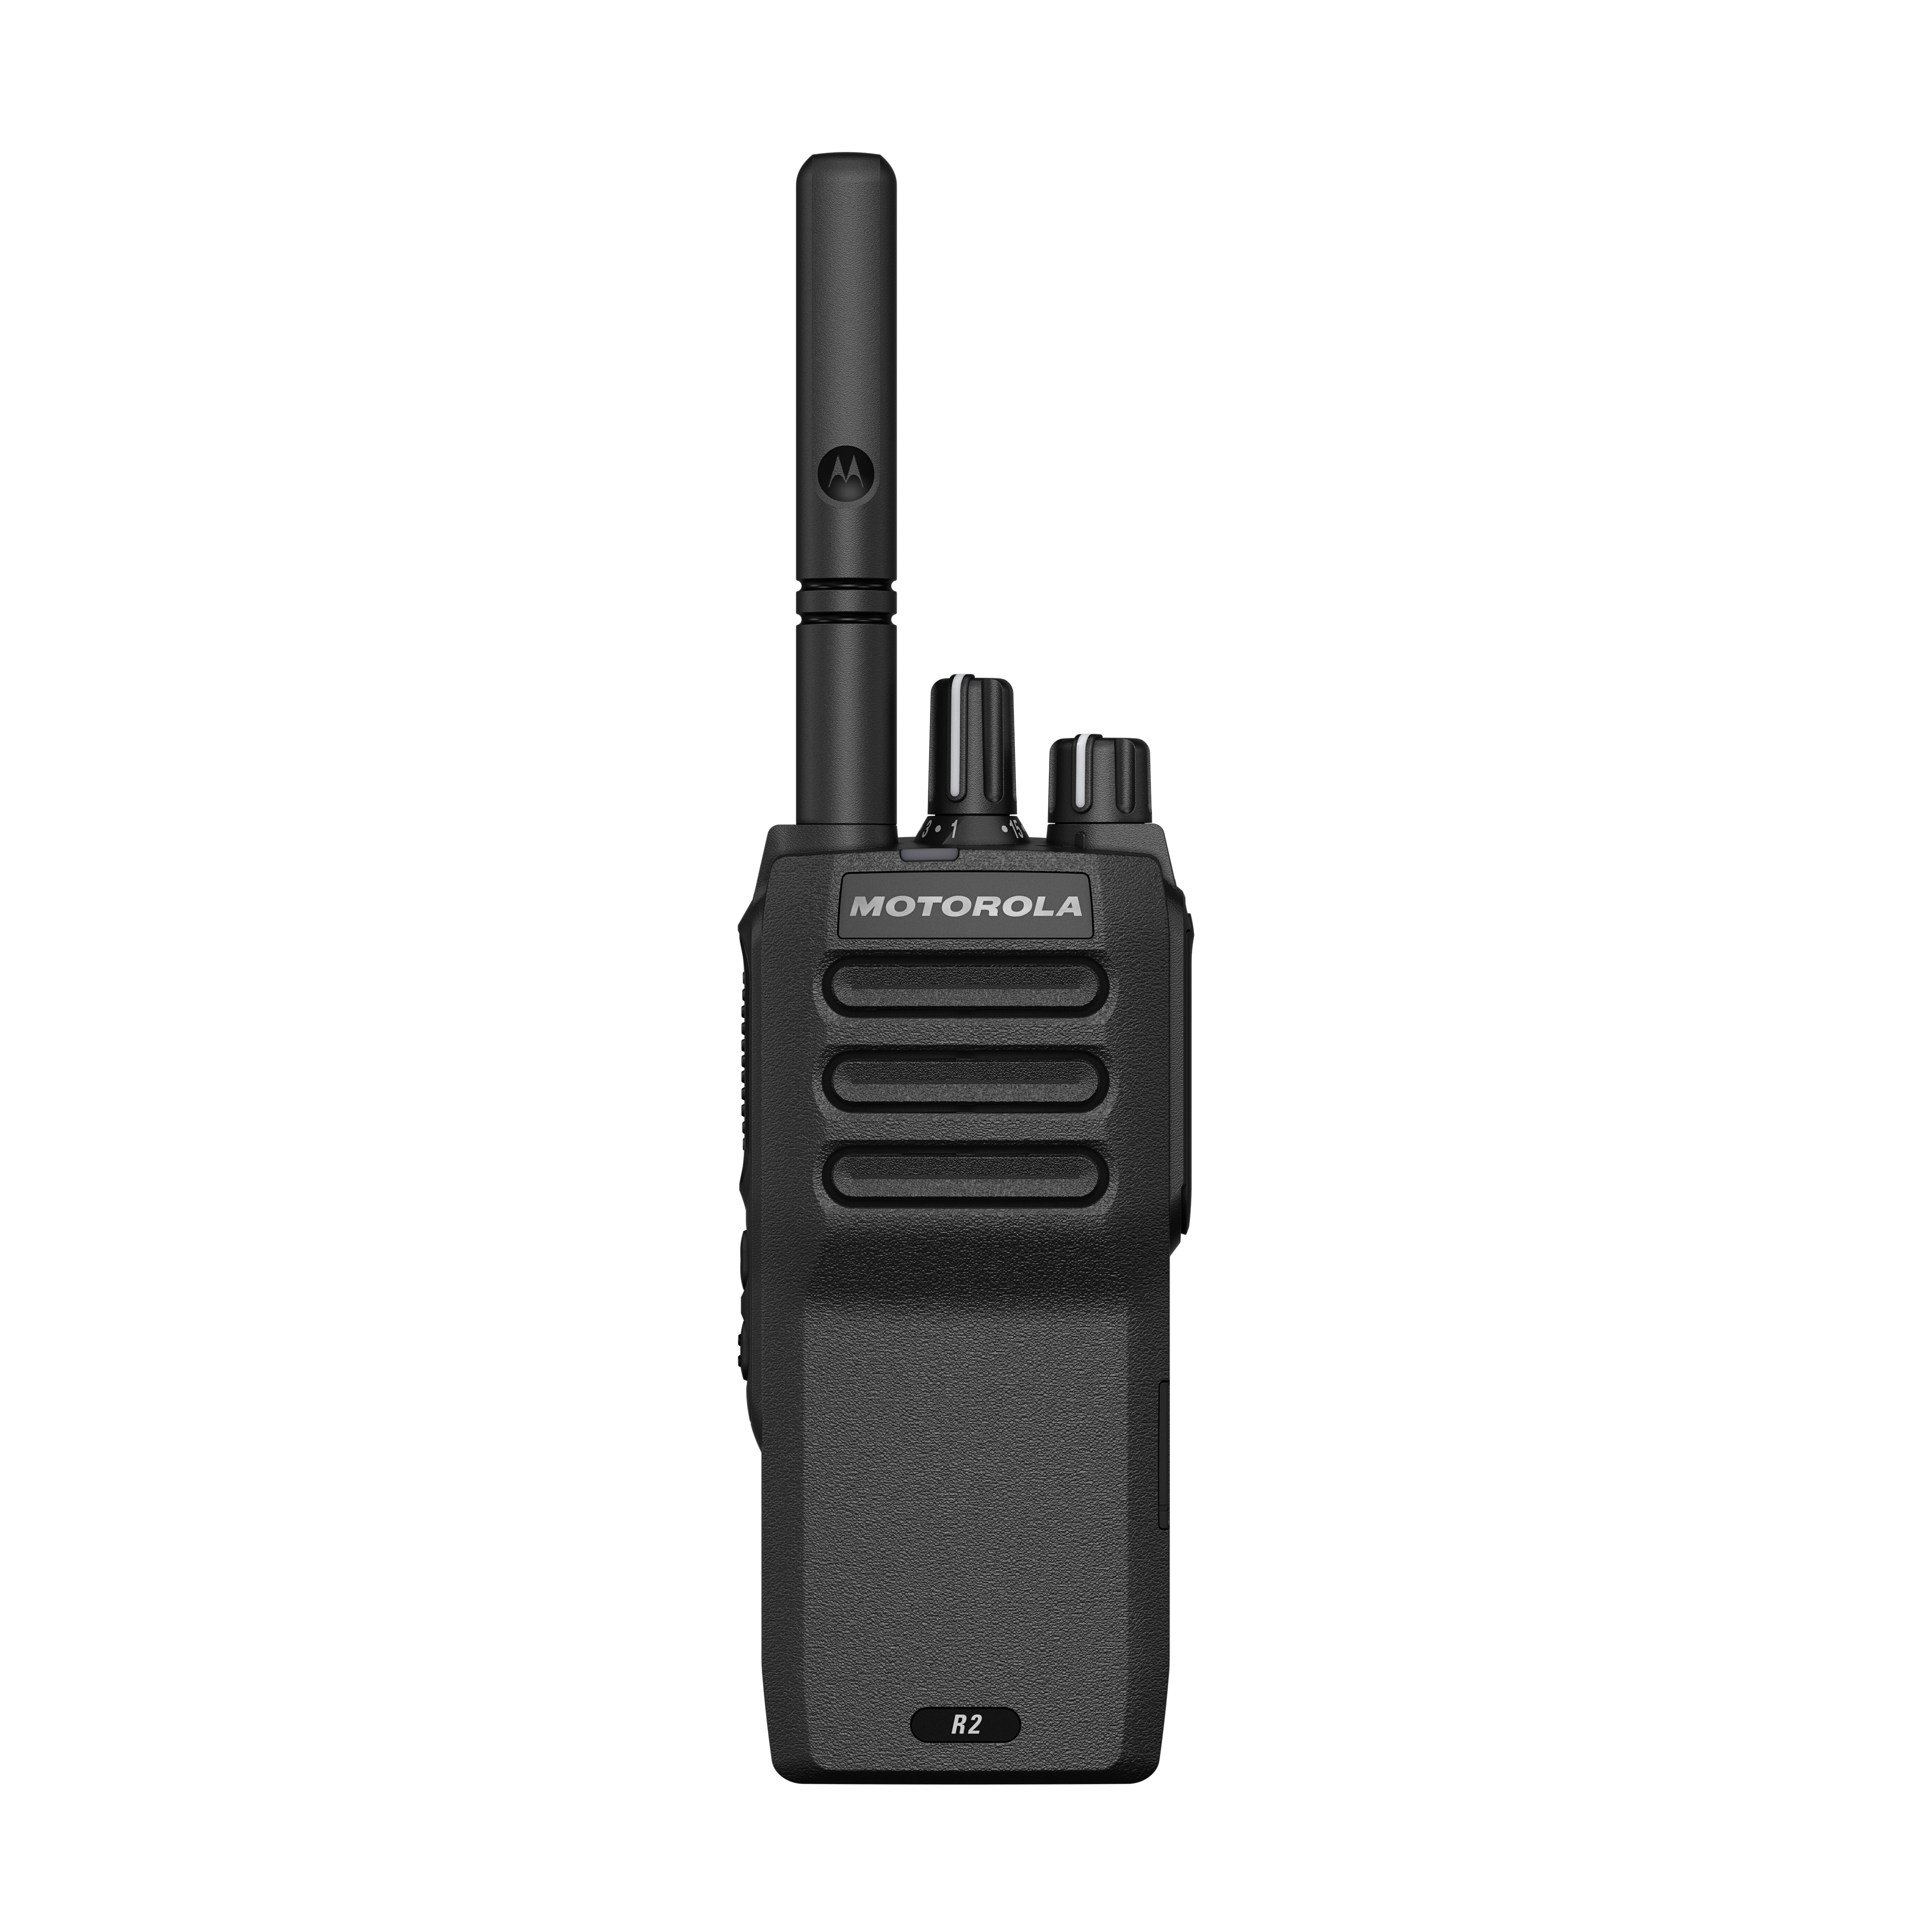 Digital Portables : Motorola R2 Numérique